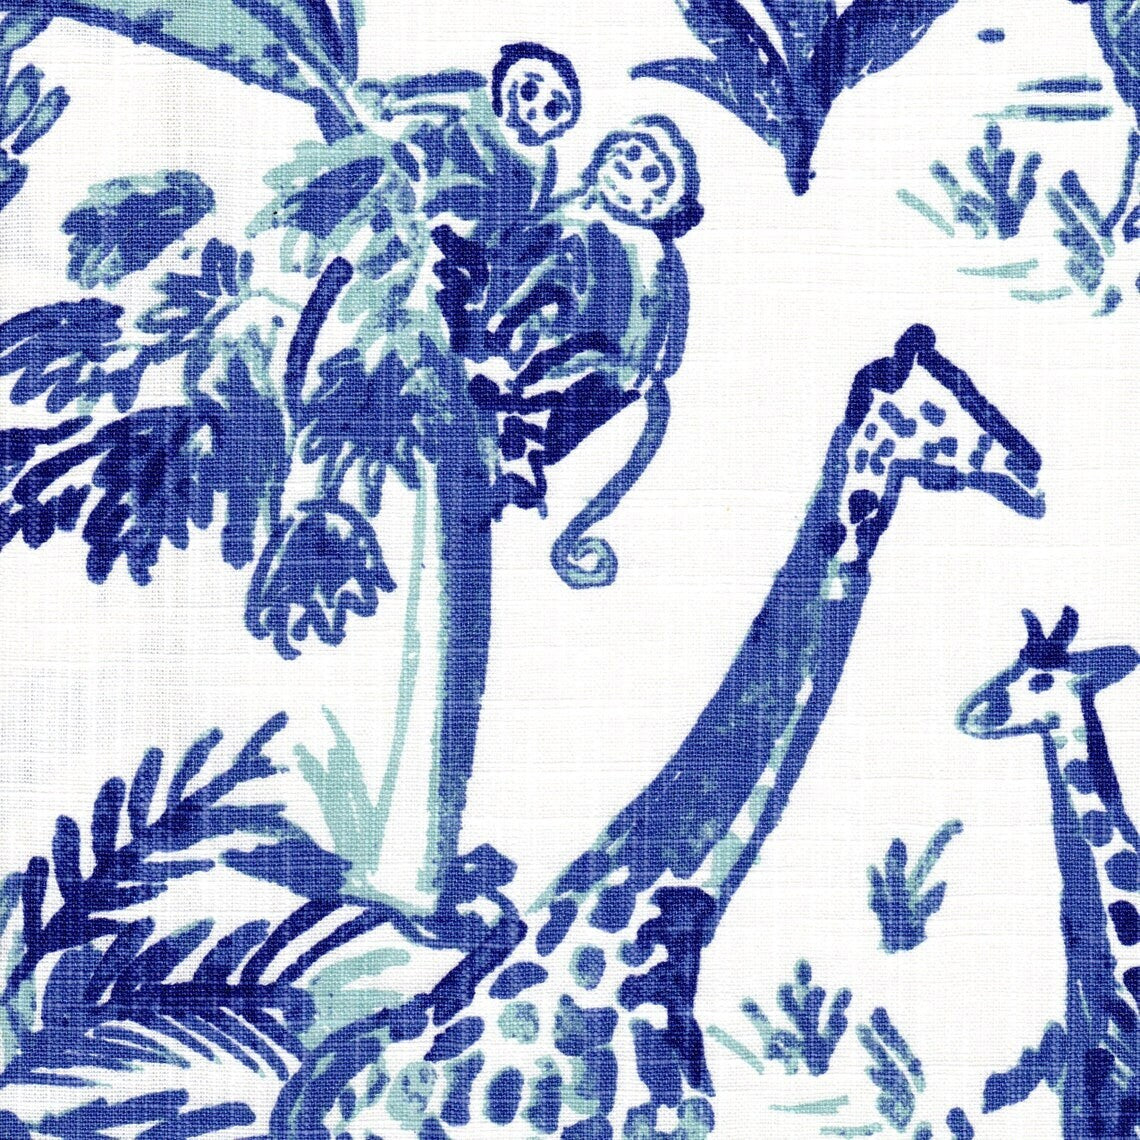 tie-up valance in meru commodore blue, cancun blue safari animal toile